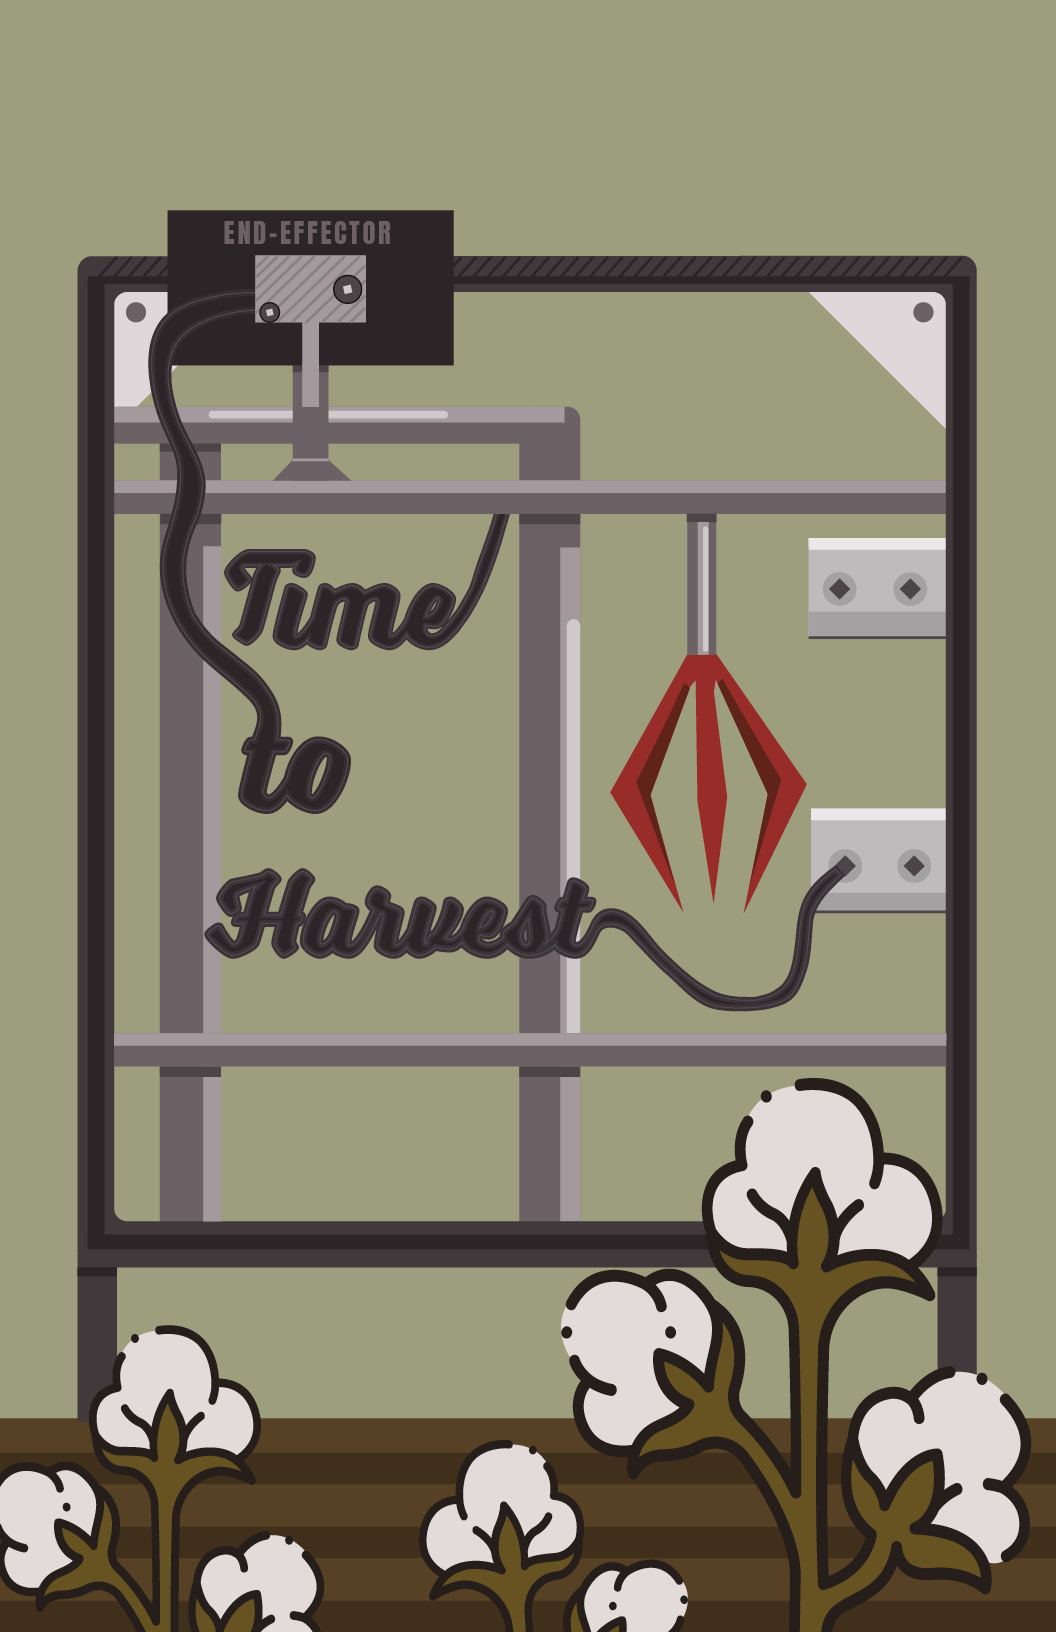 Digital poster design with illustration of robot picking cotton.